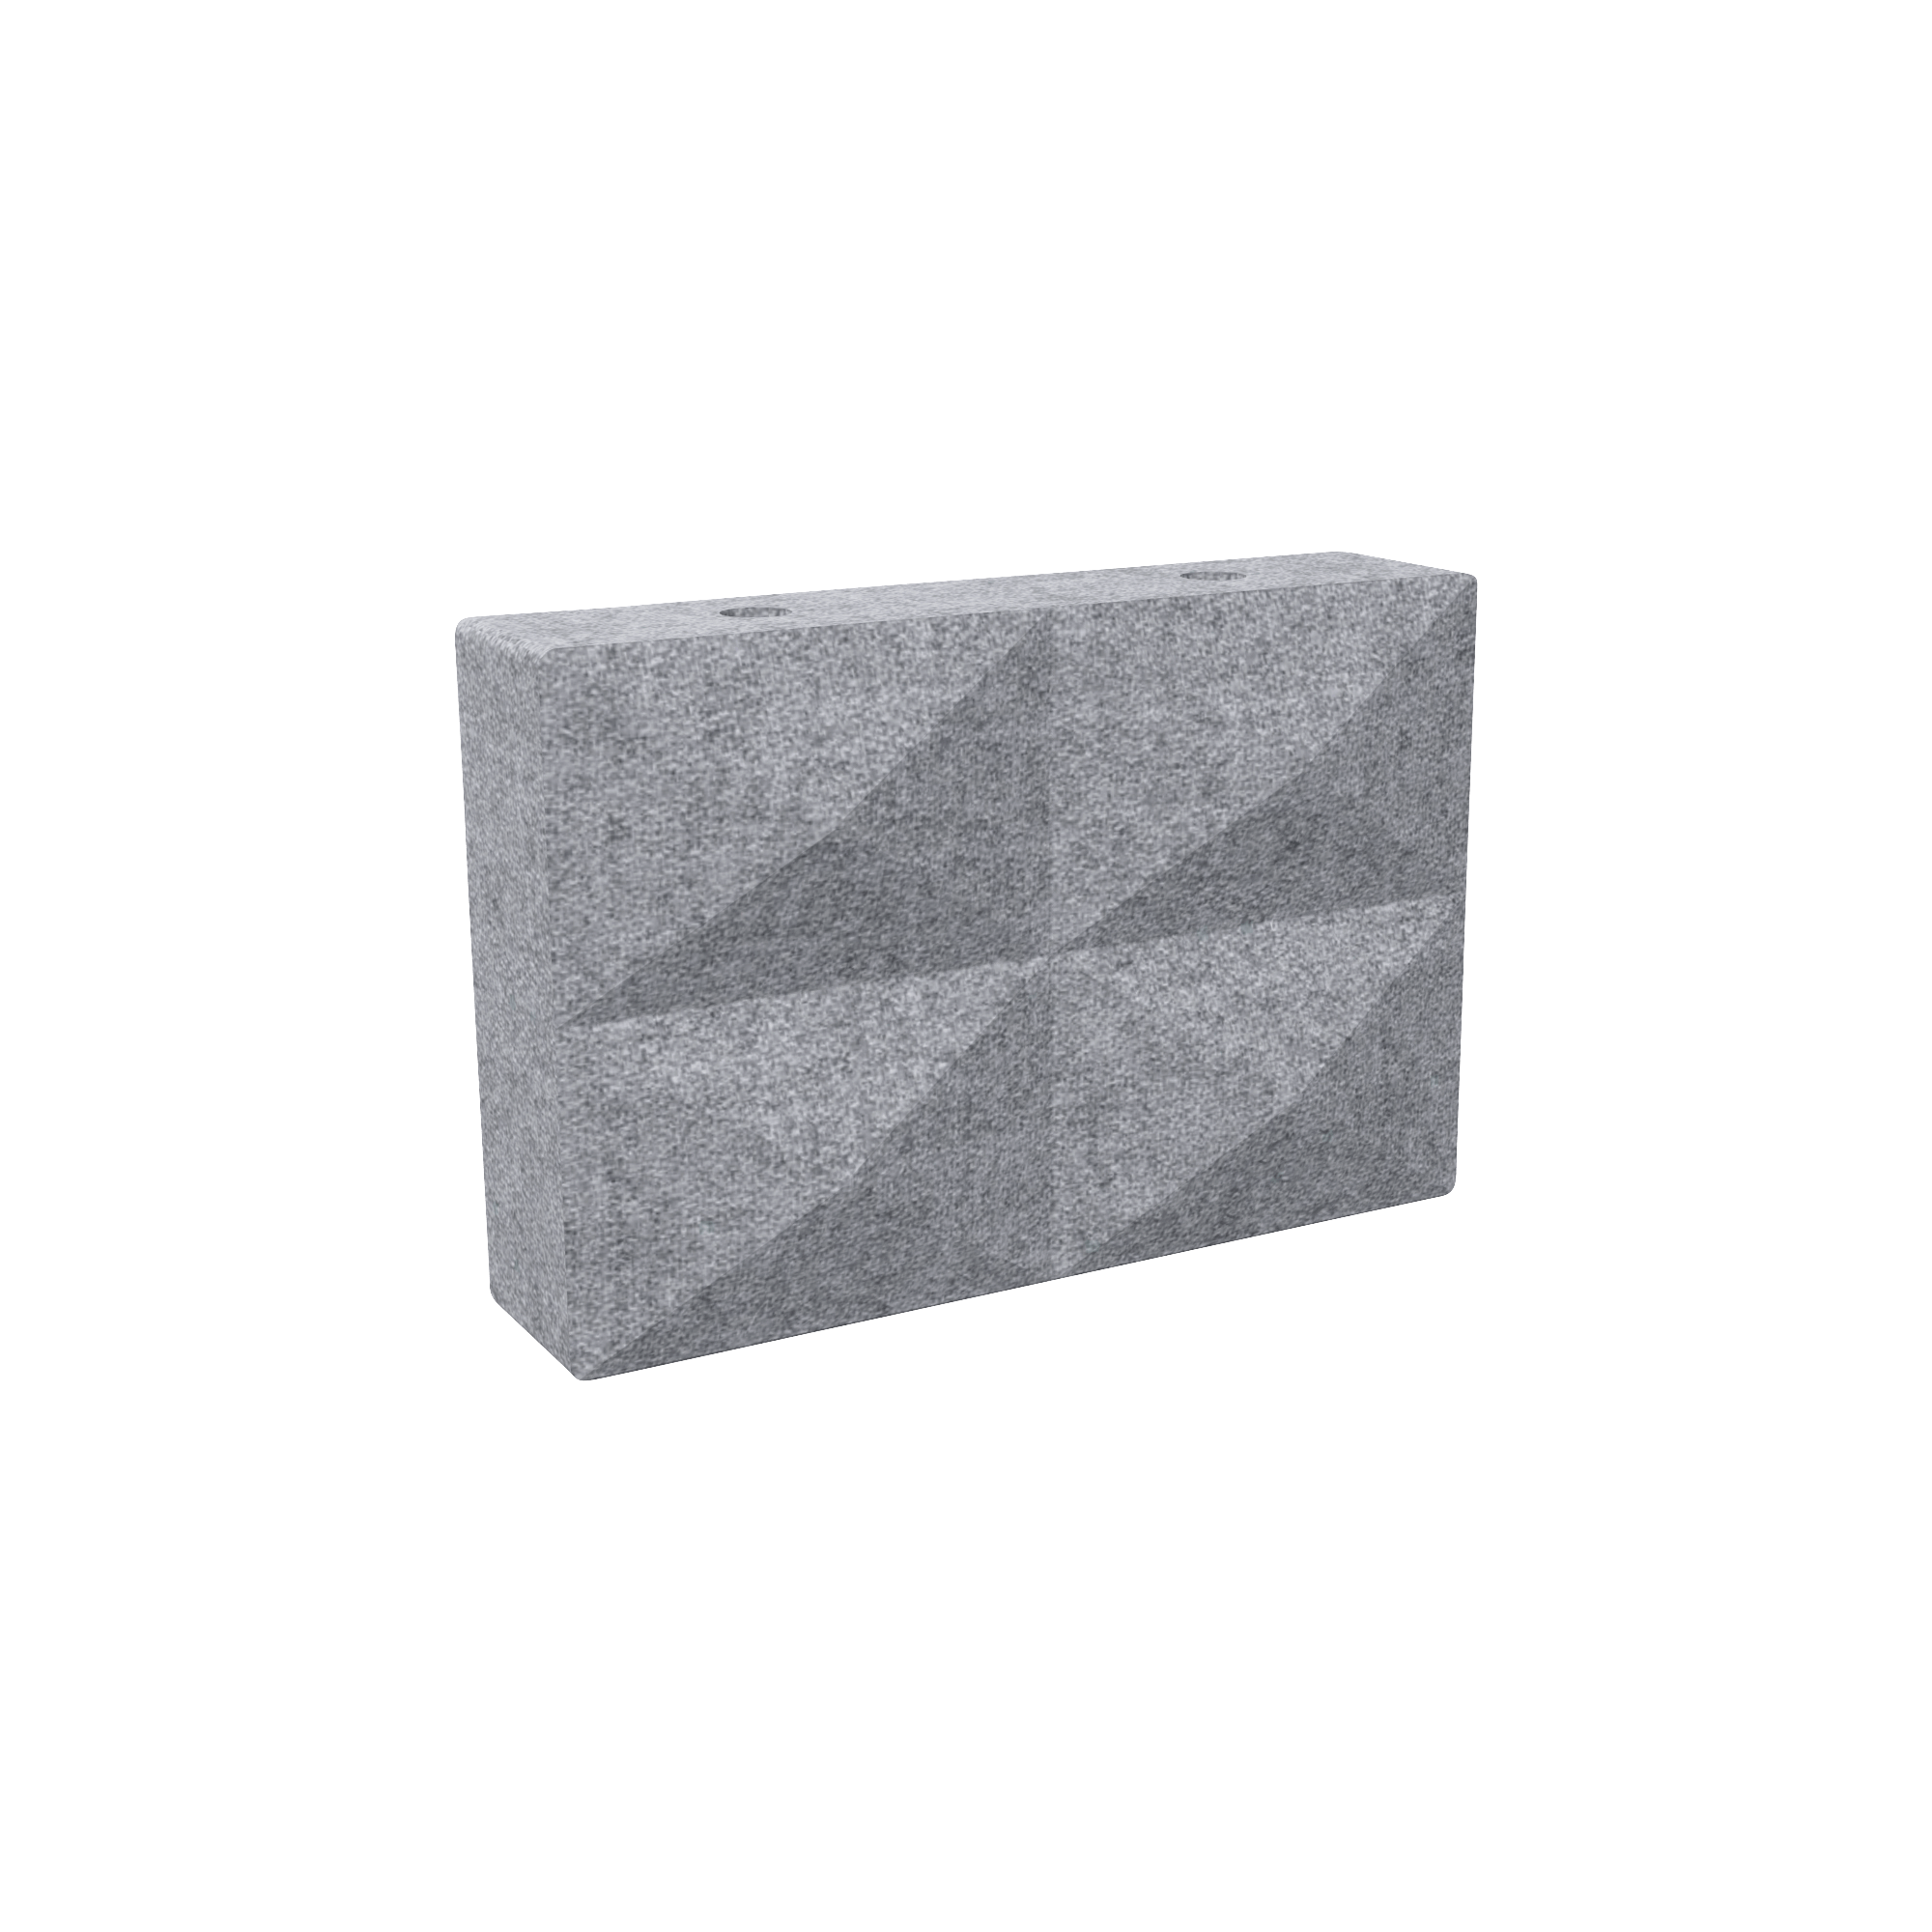 Grey acoustic block